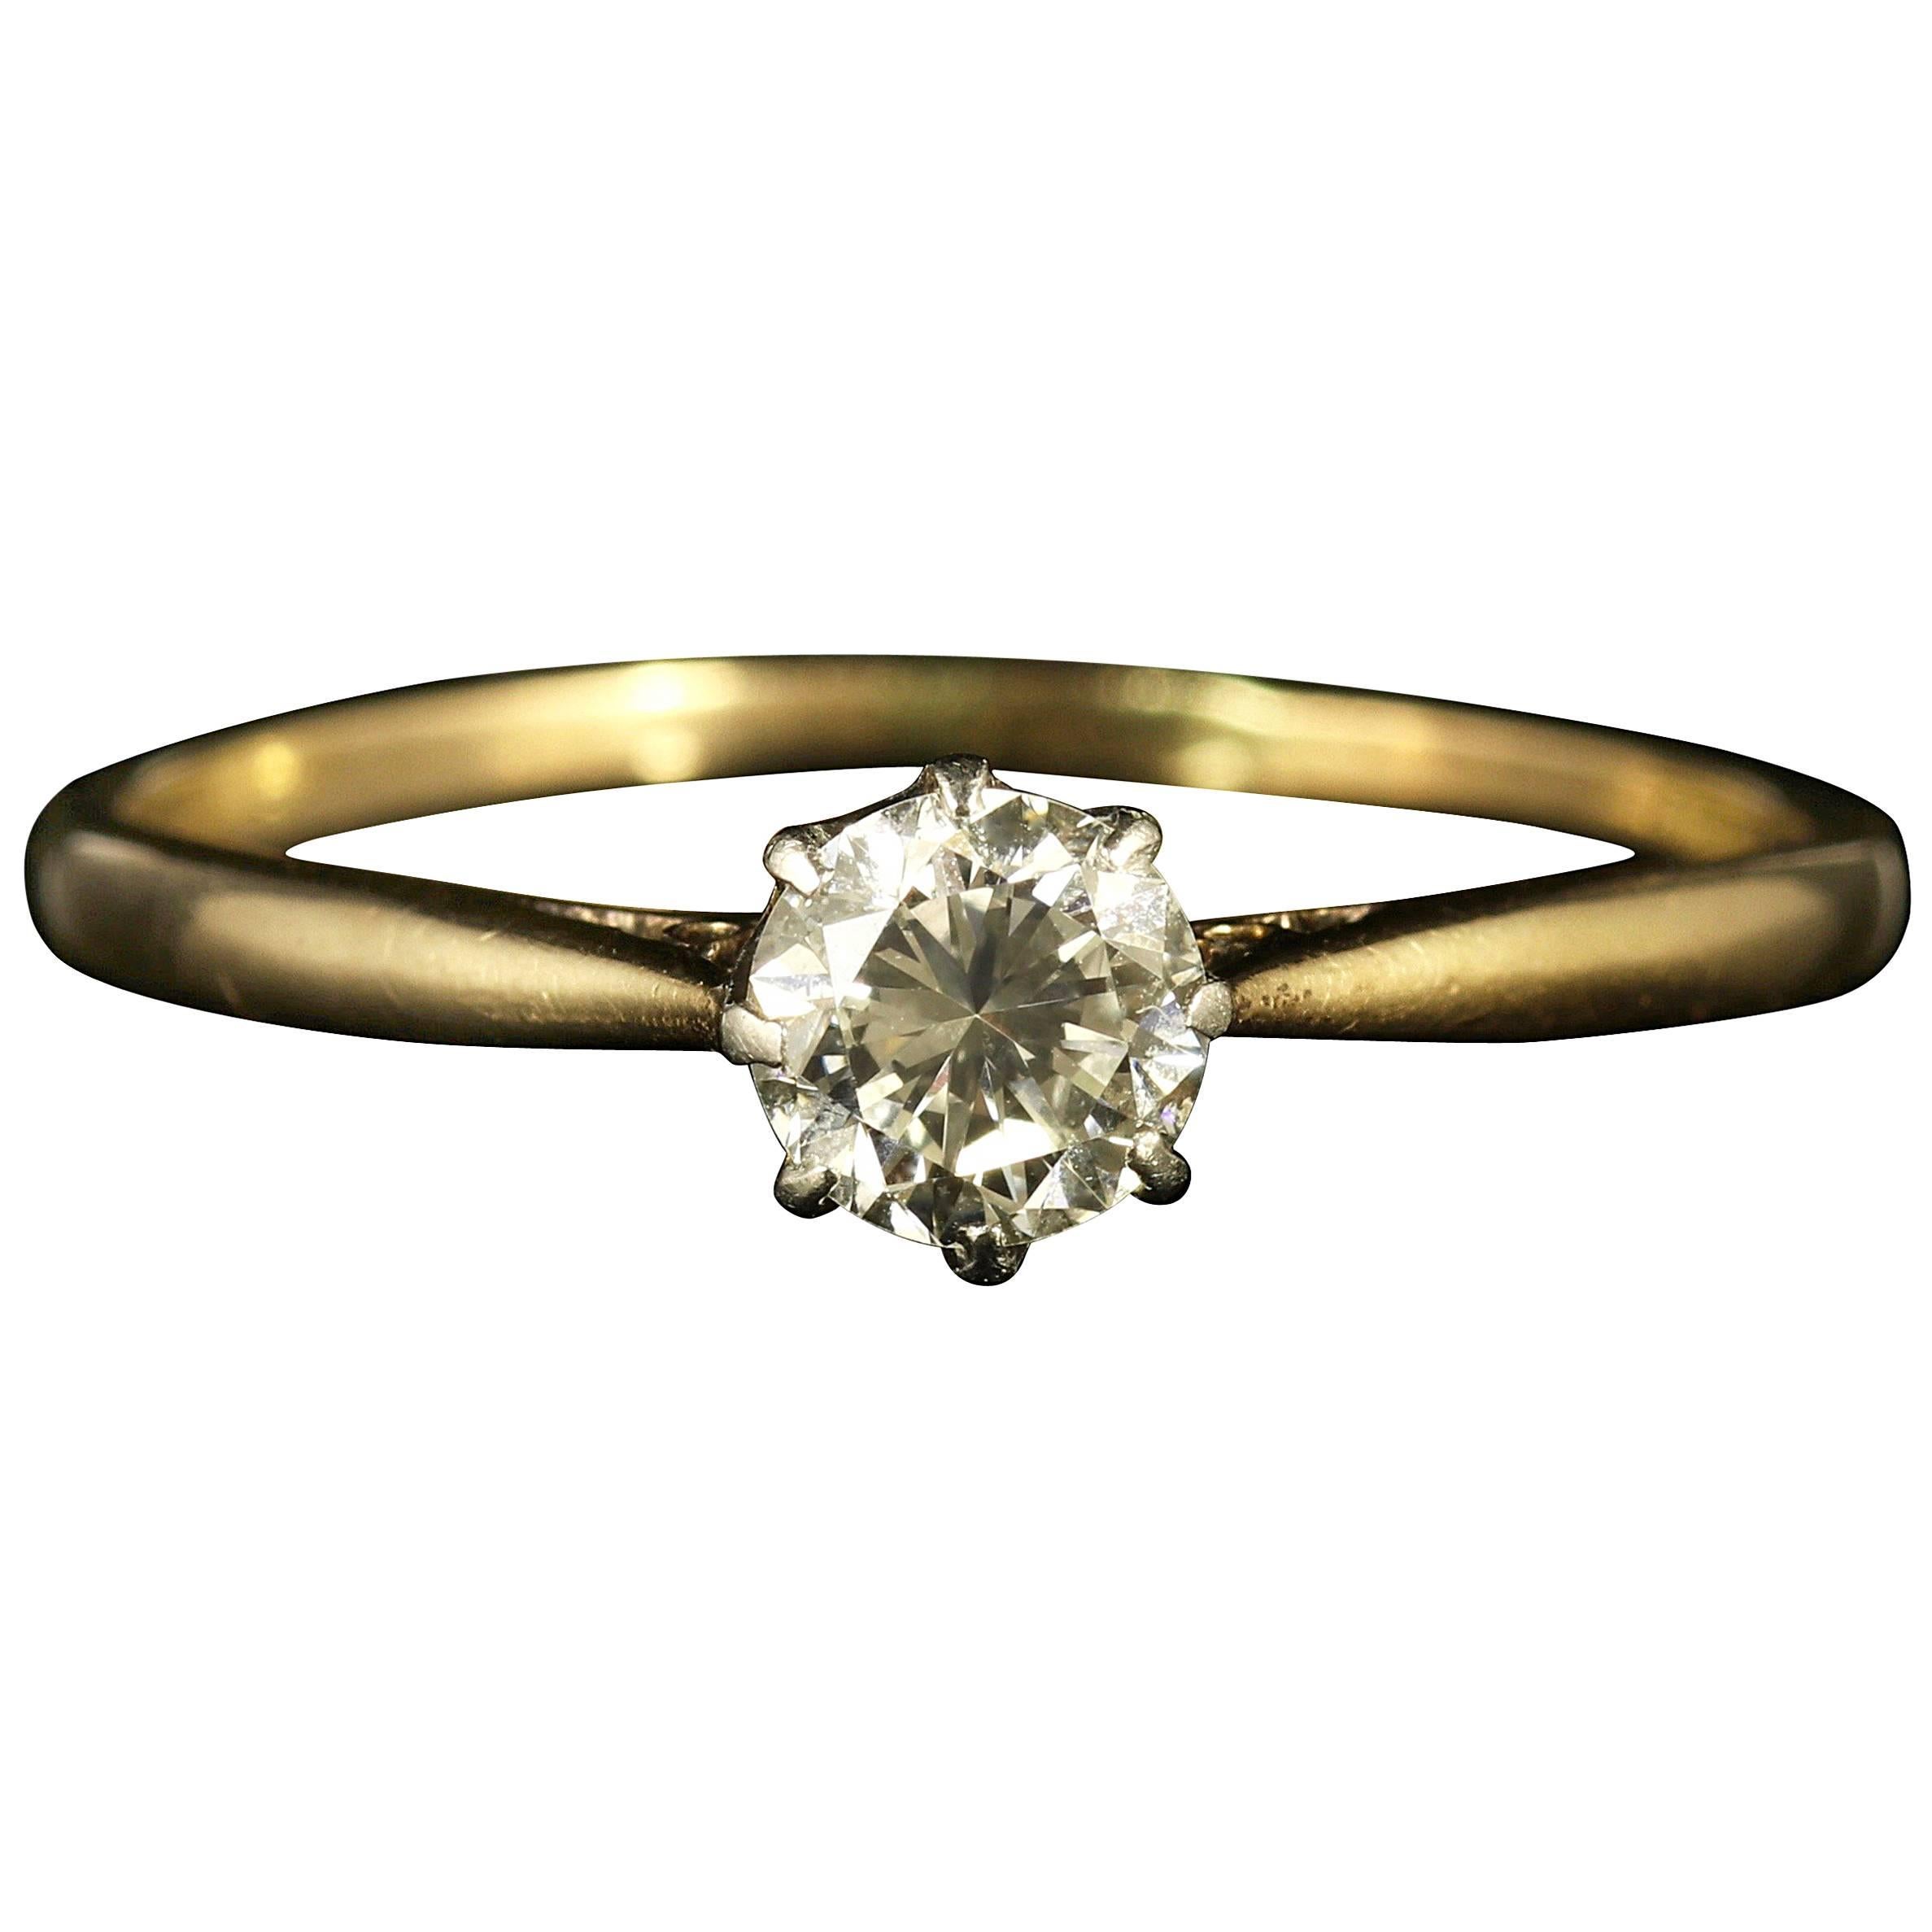 Antique Edwardian Diamond Solitaire Ring, circa 1901